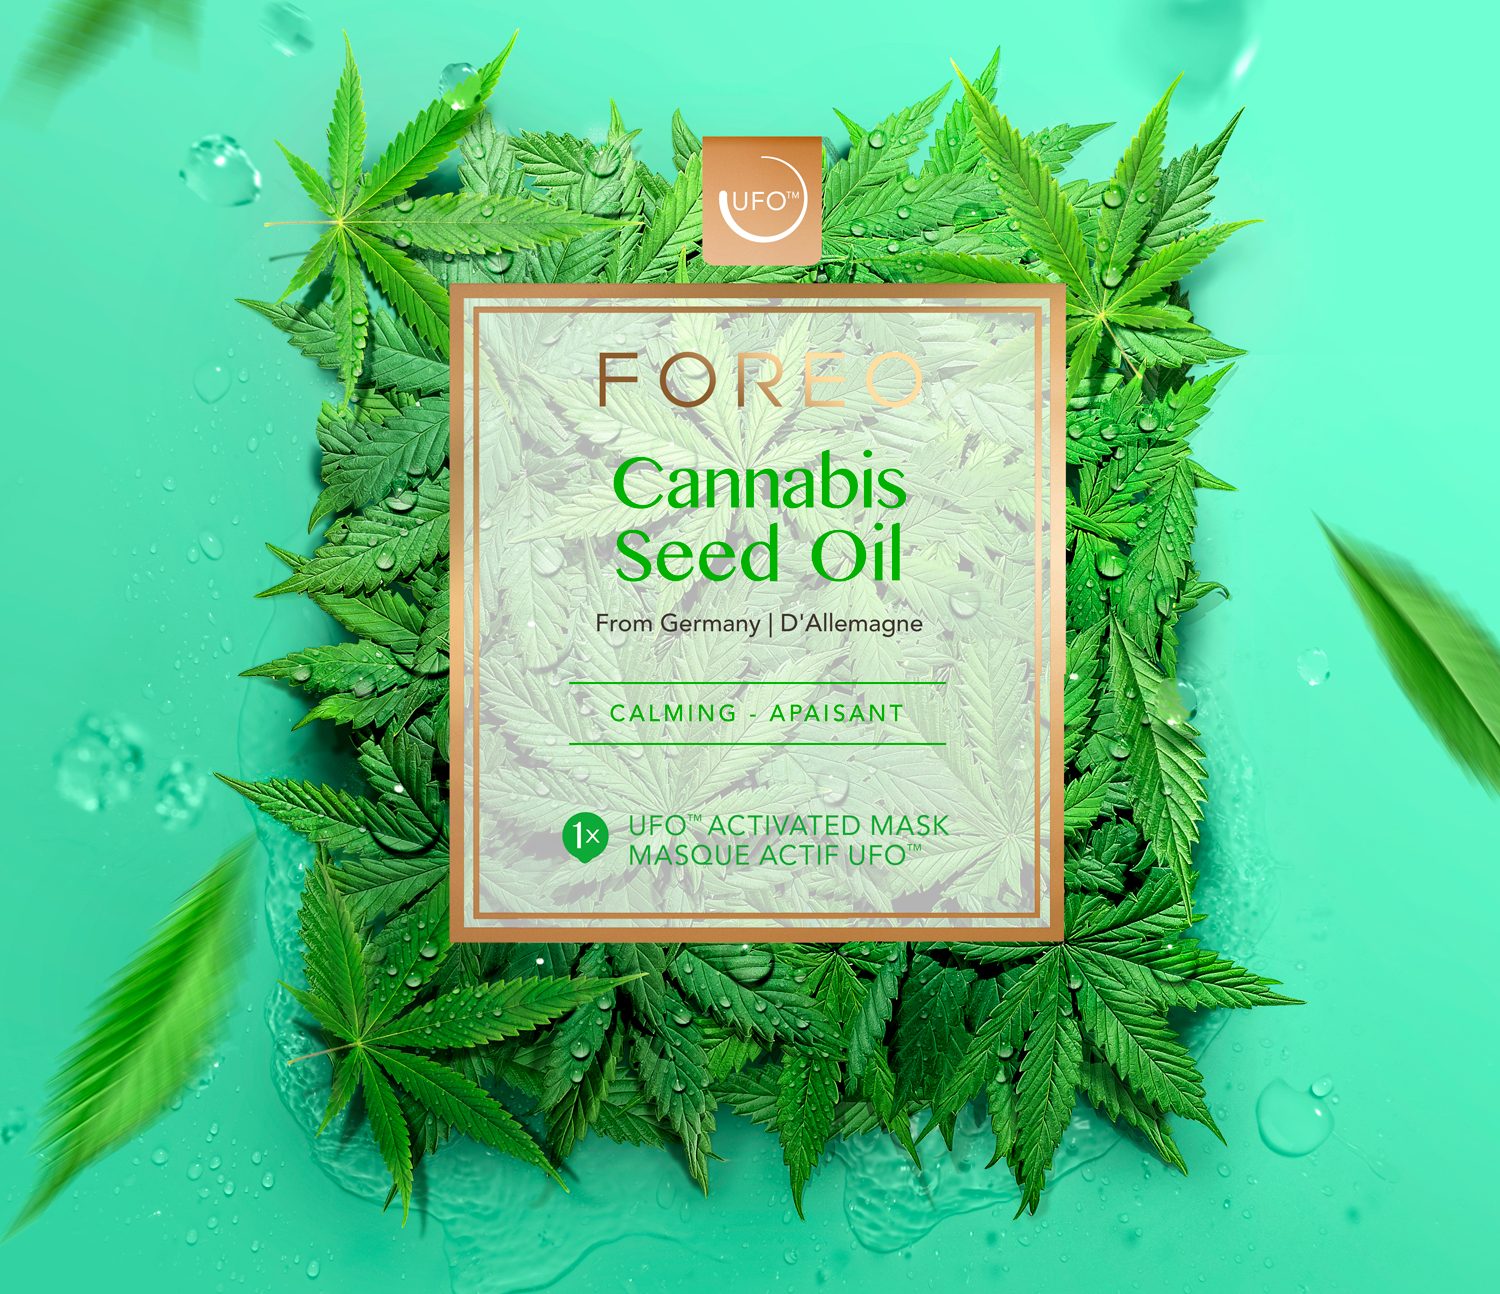 foreo_cannabis_seed_oil_mask_4.jpg